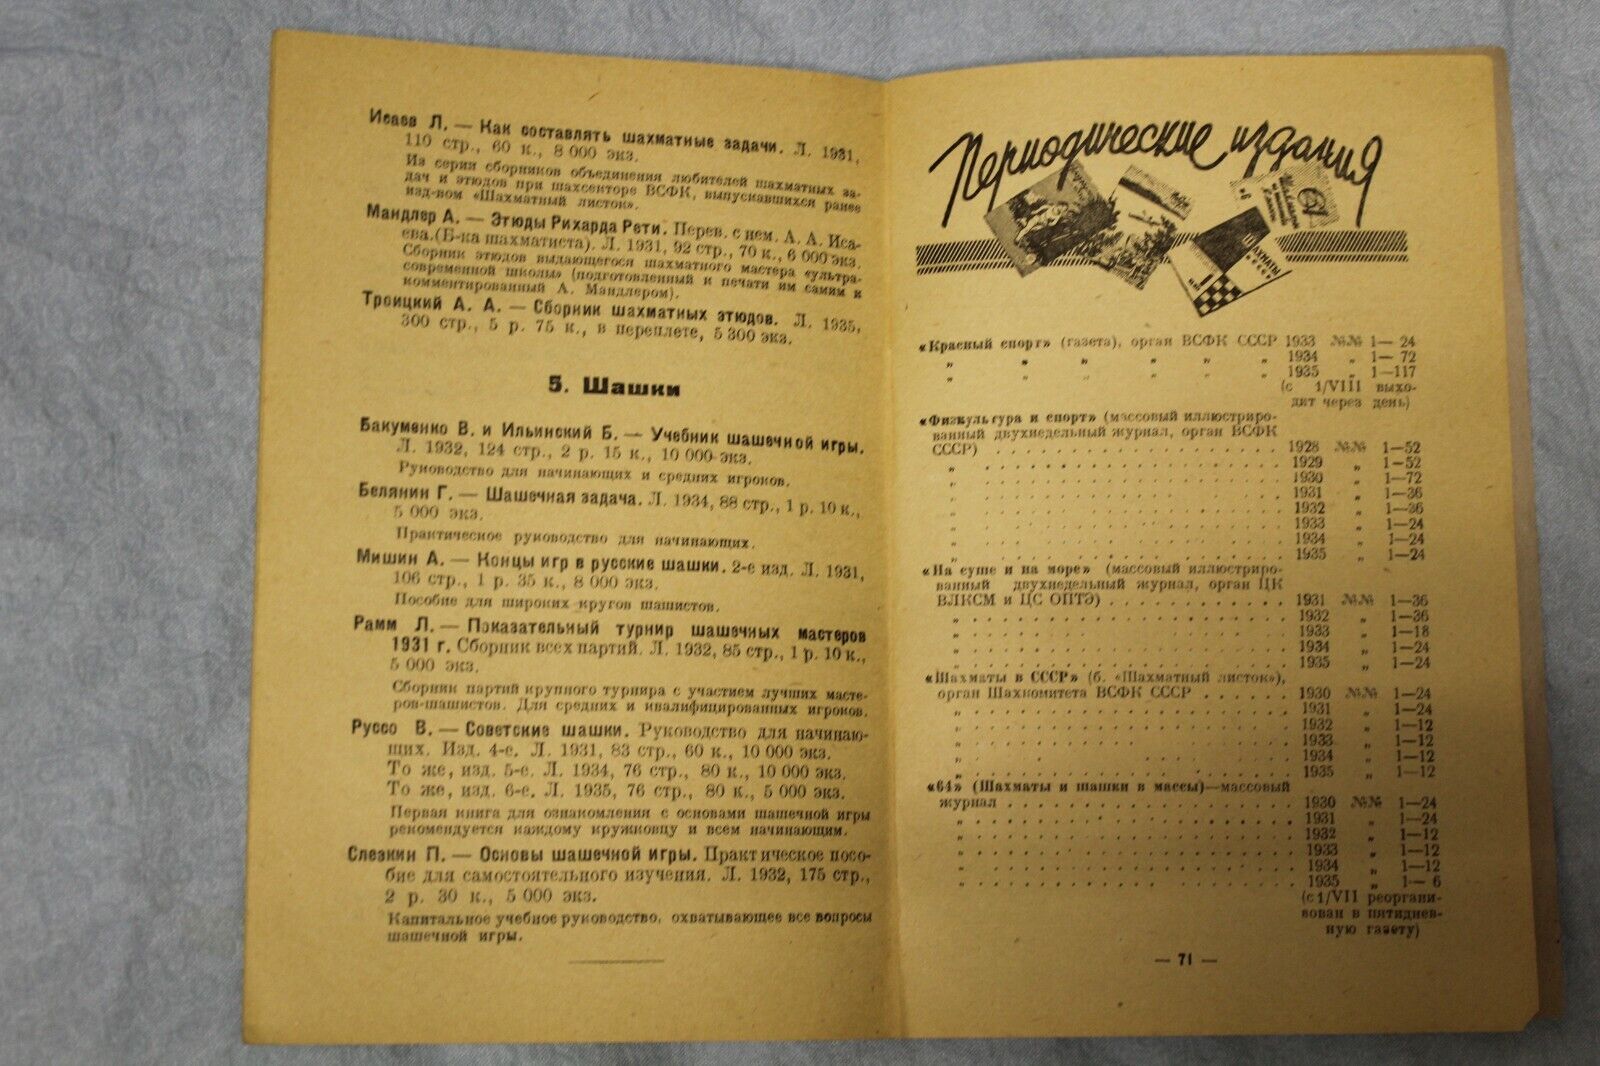 10999.Chess book Baturinsky-Karpov library: Physical Activity, Tourism, Chess, 1928-35